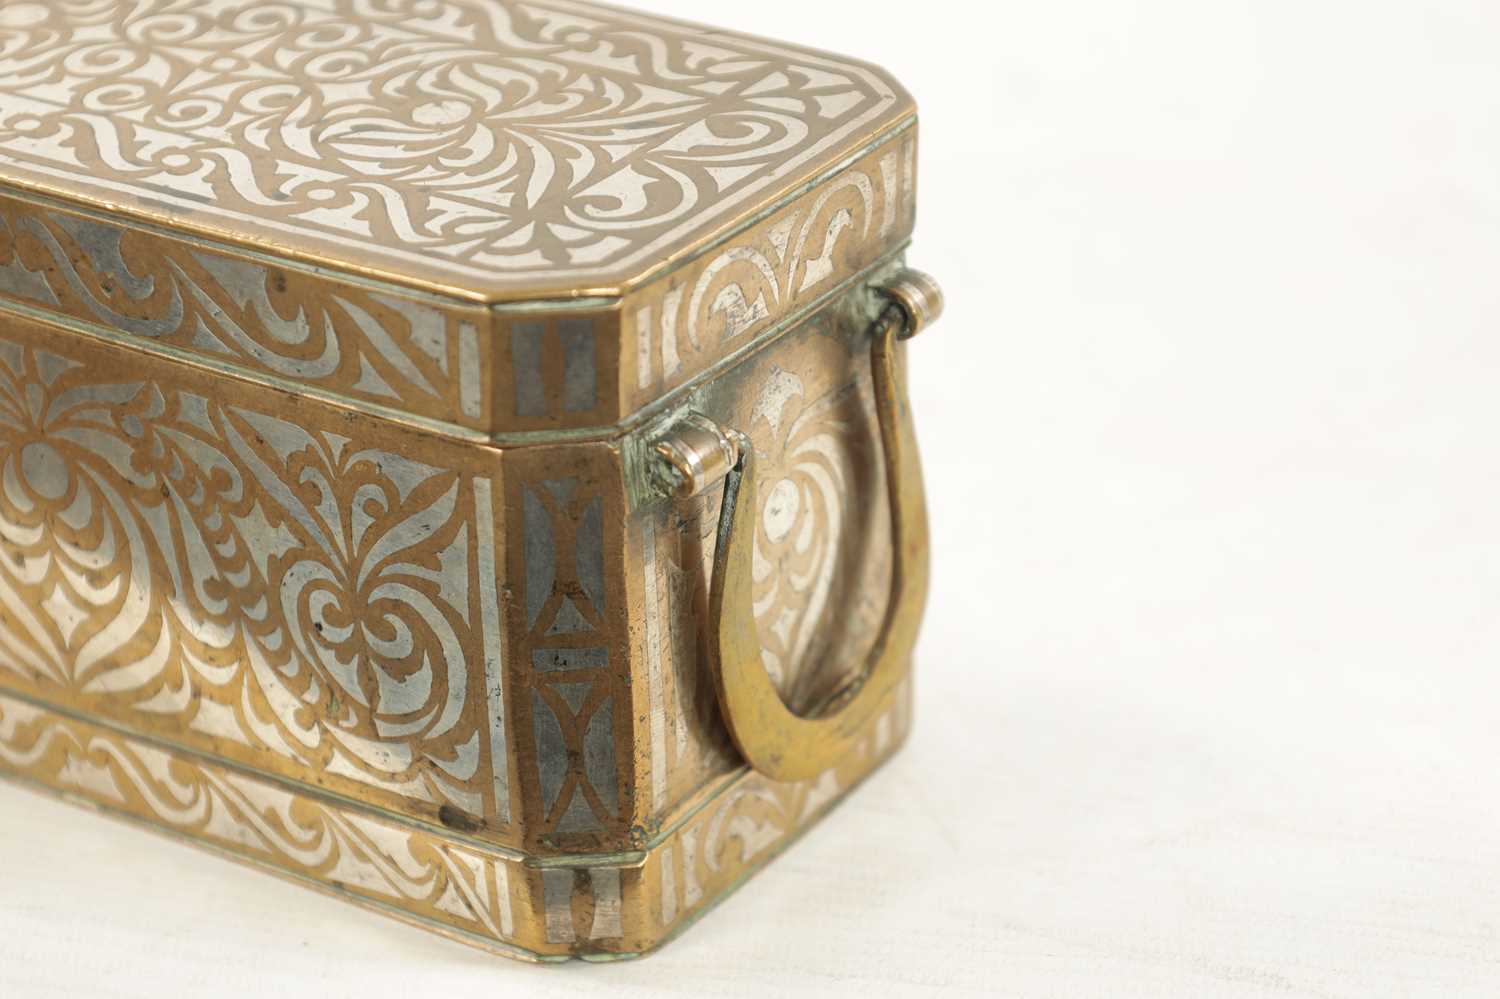 A LATE 19TH CENTURY MARANOA SILVER INLAID BRONZE BETEL NUT BOX - Image 2 of 7